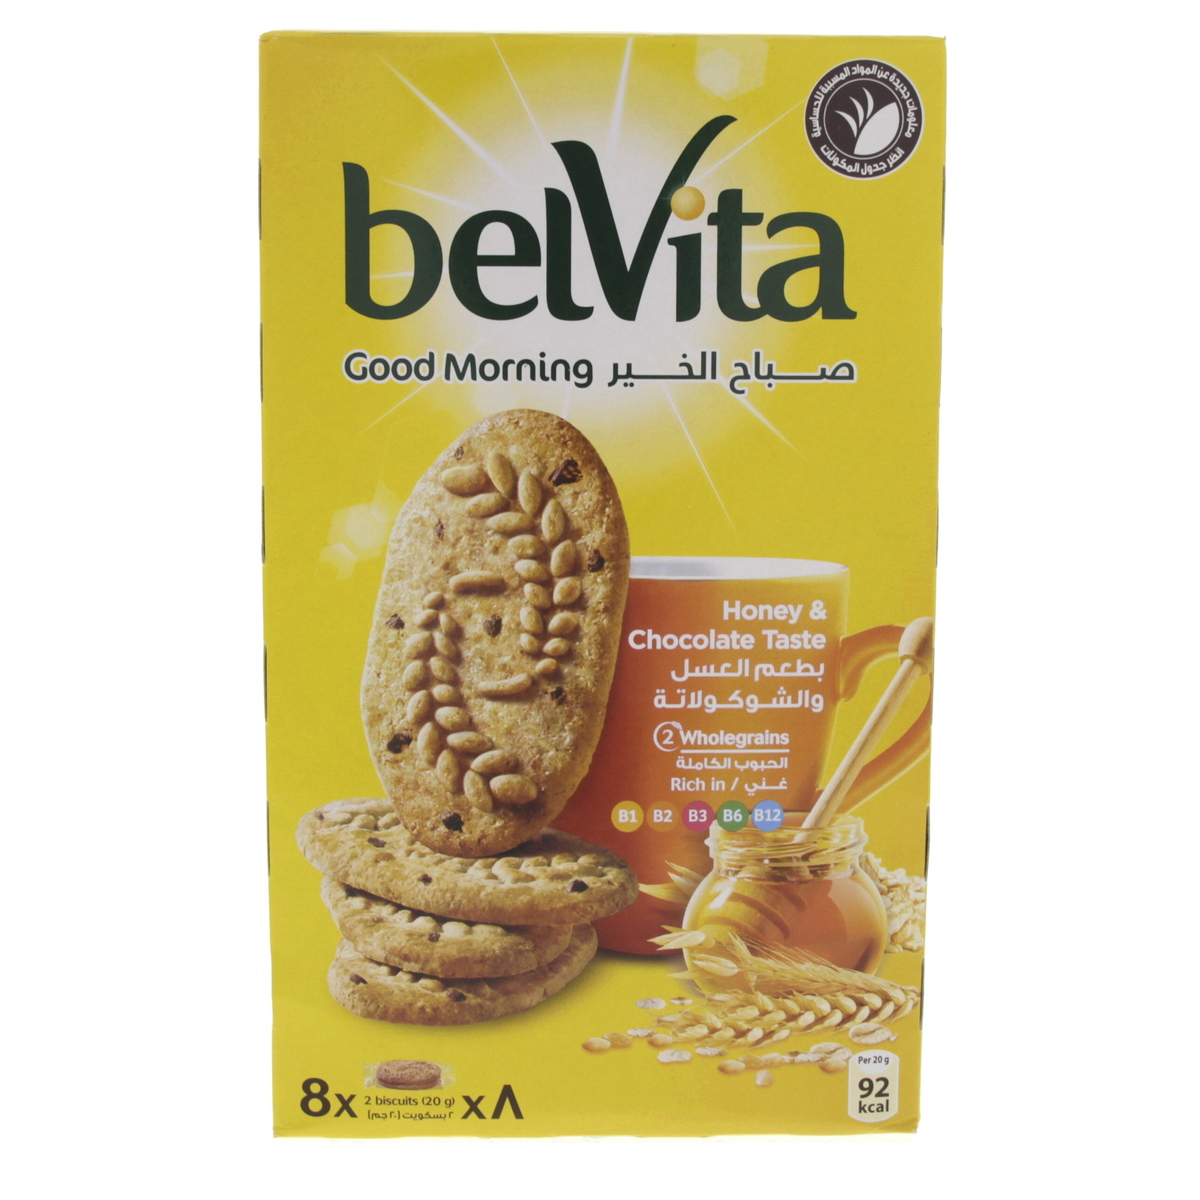 Belvita Good Morning Honey and Chocolate Taste Biscuits 160g